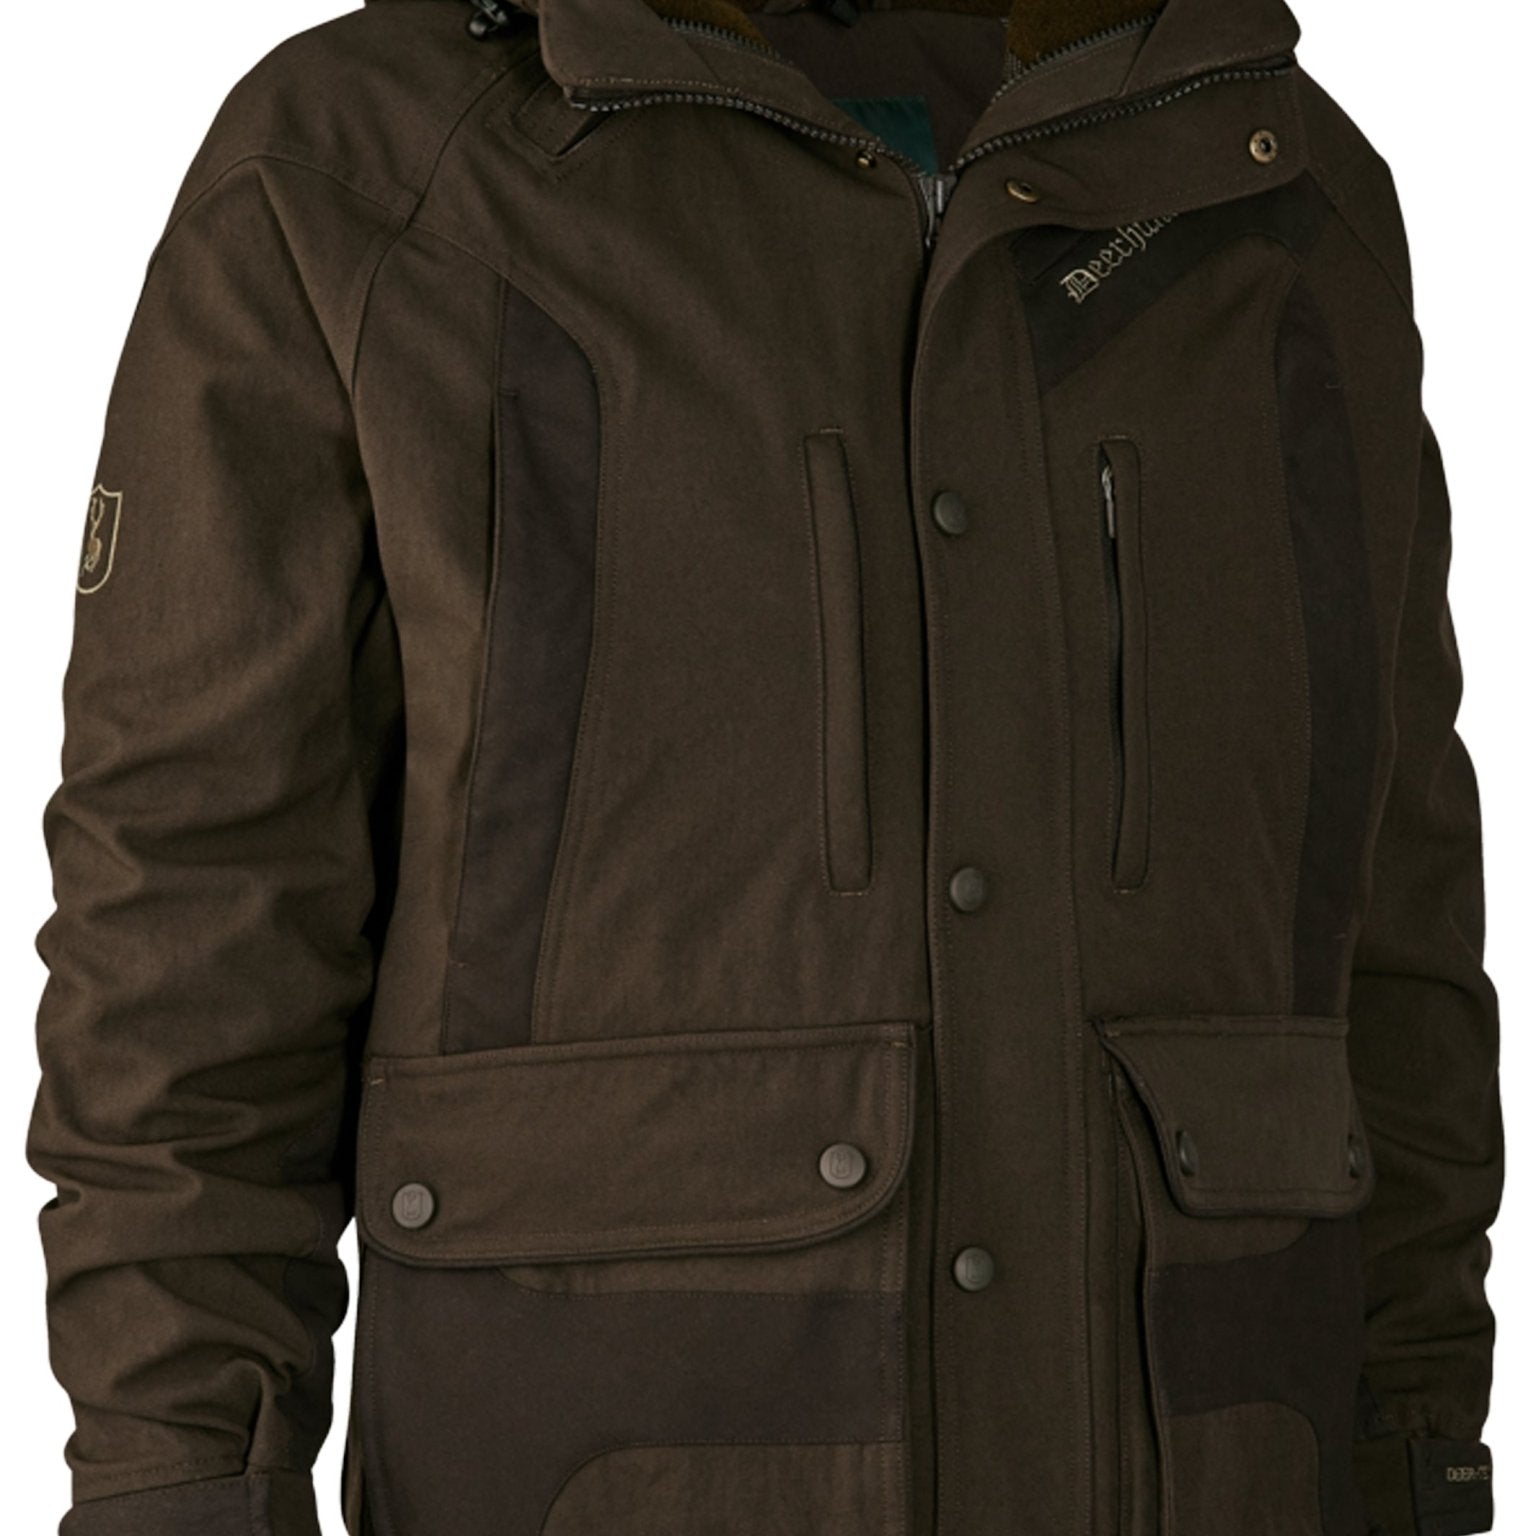 4elementsclothingDeerhunterDeerhunter - Muflon Extreme Jacket / Coat - Waterproof & WindproofOuterwear5975-585-48